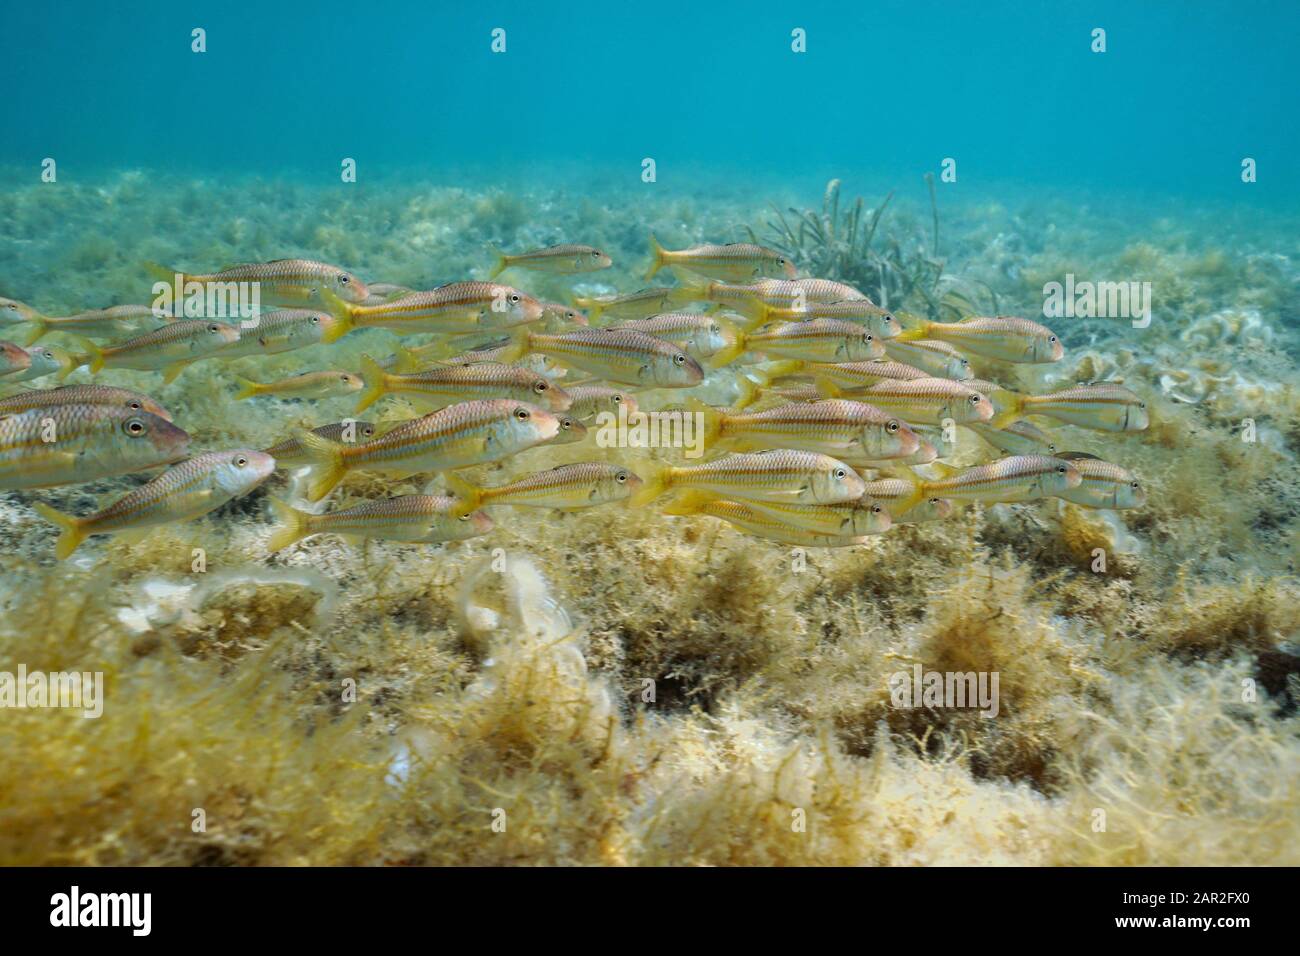 Scuola di pesce, triglie rosse (Mullus surmuletus) sott'acqua nel Mediterraneo, Spagna, Costa Brava, Cadaques, Catalogna, Cap de Creus Foto Stock